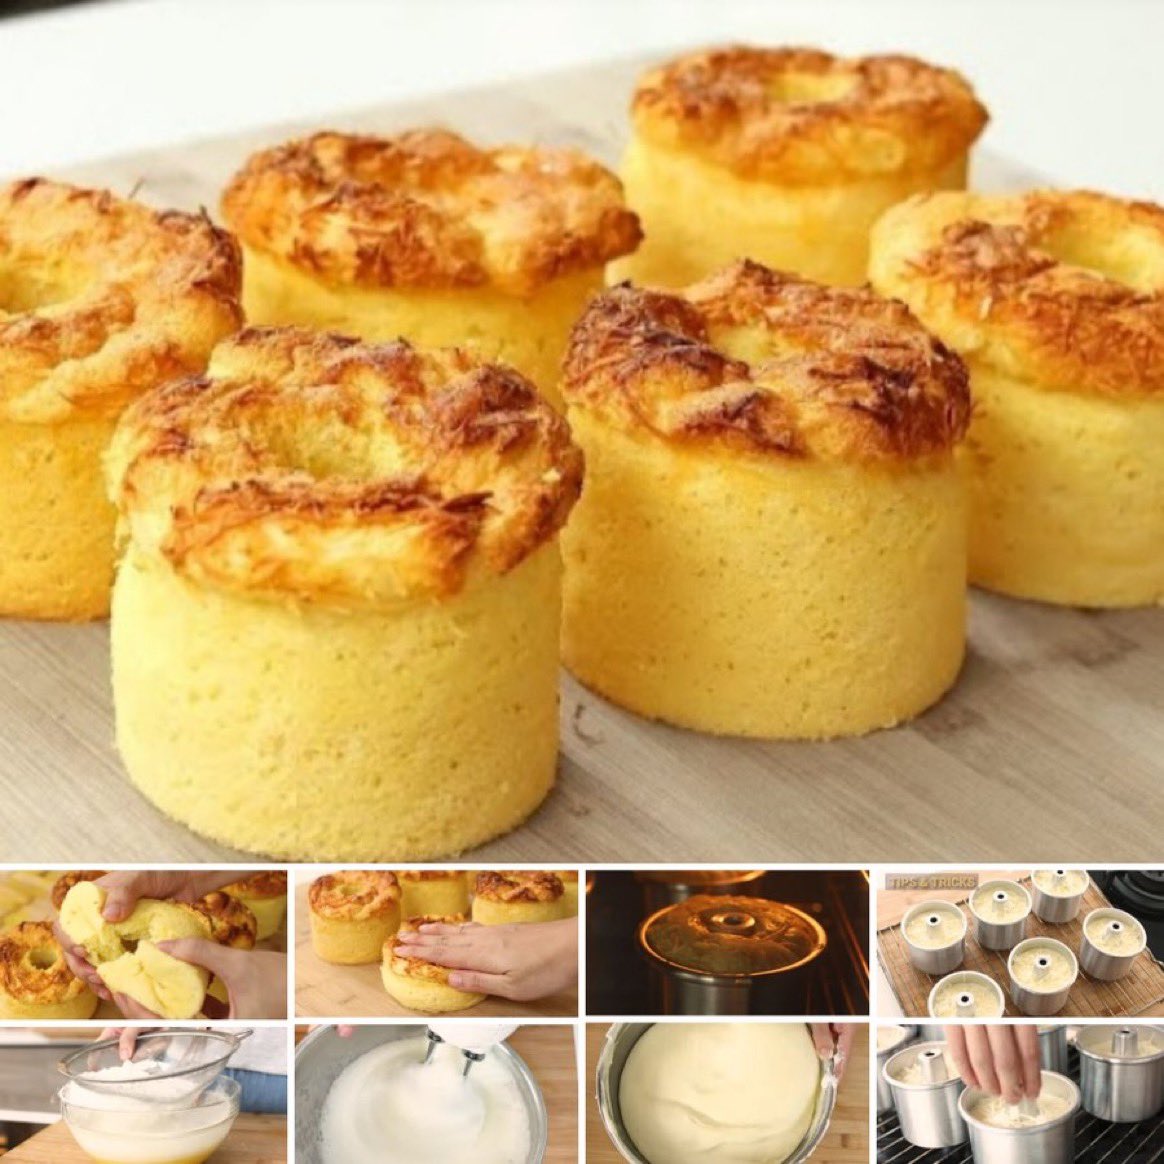 HMMM... YUMMY
Cheese Chiffon Cake - Recipe | (with English subtitles) 

Just click Devina Hermawan's Youtube Channel
youtu.be/gpjLlXvqwz0 

#InfoKulinerEnak 
#ResepKulinerEnak 
#AnekaRagamKuliner 
#InfoCemilanEnak
#ResepKue